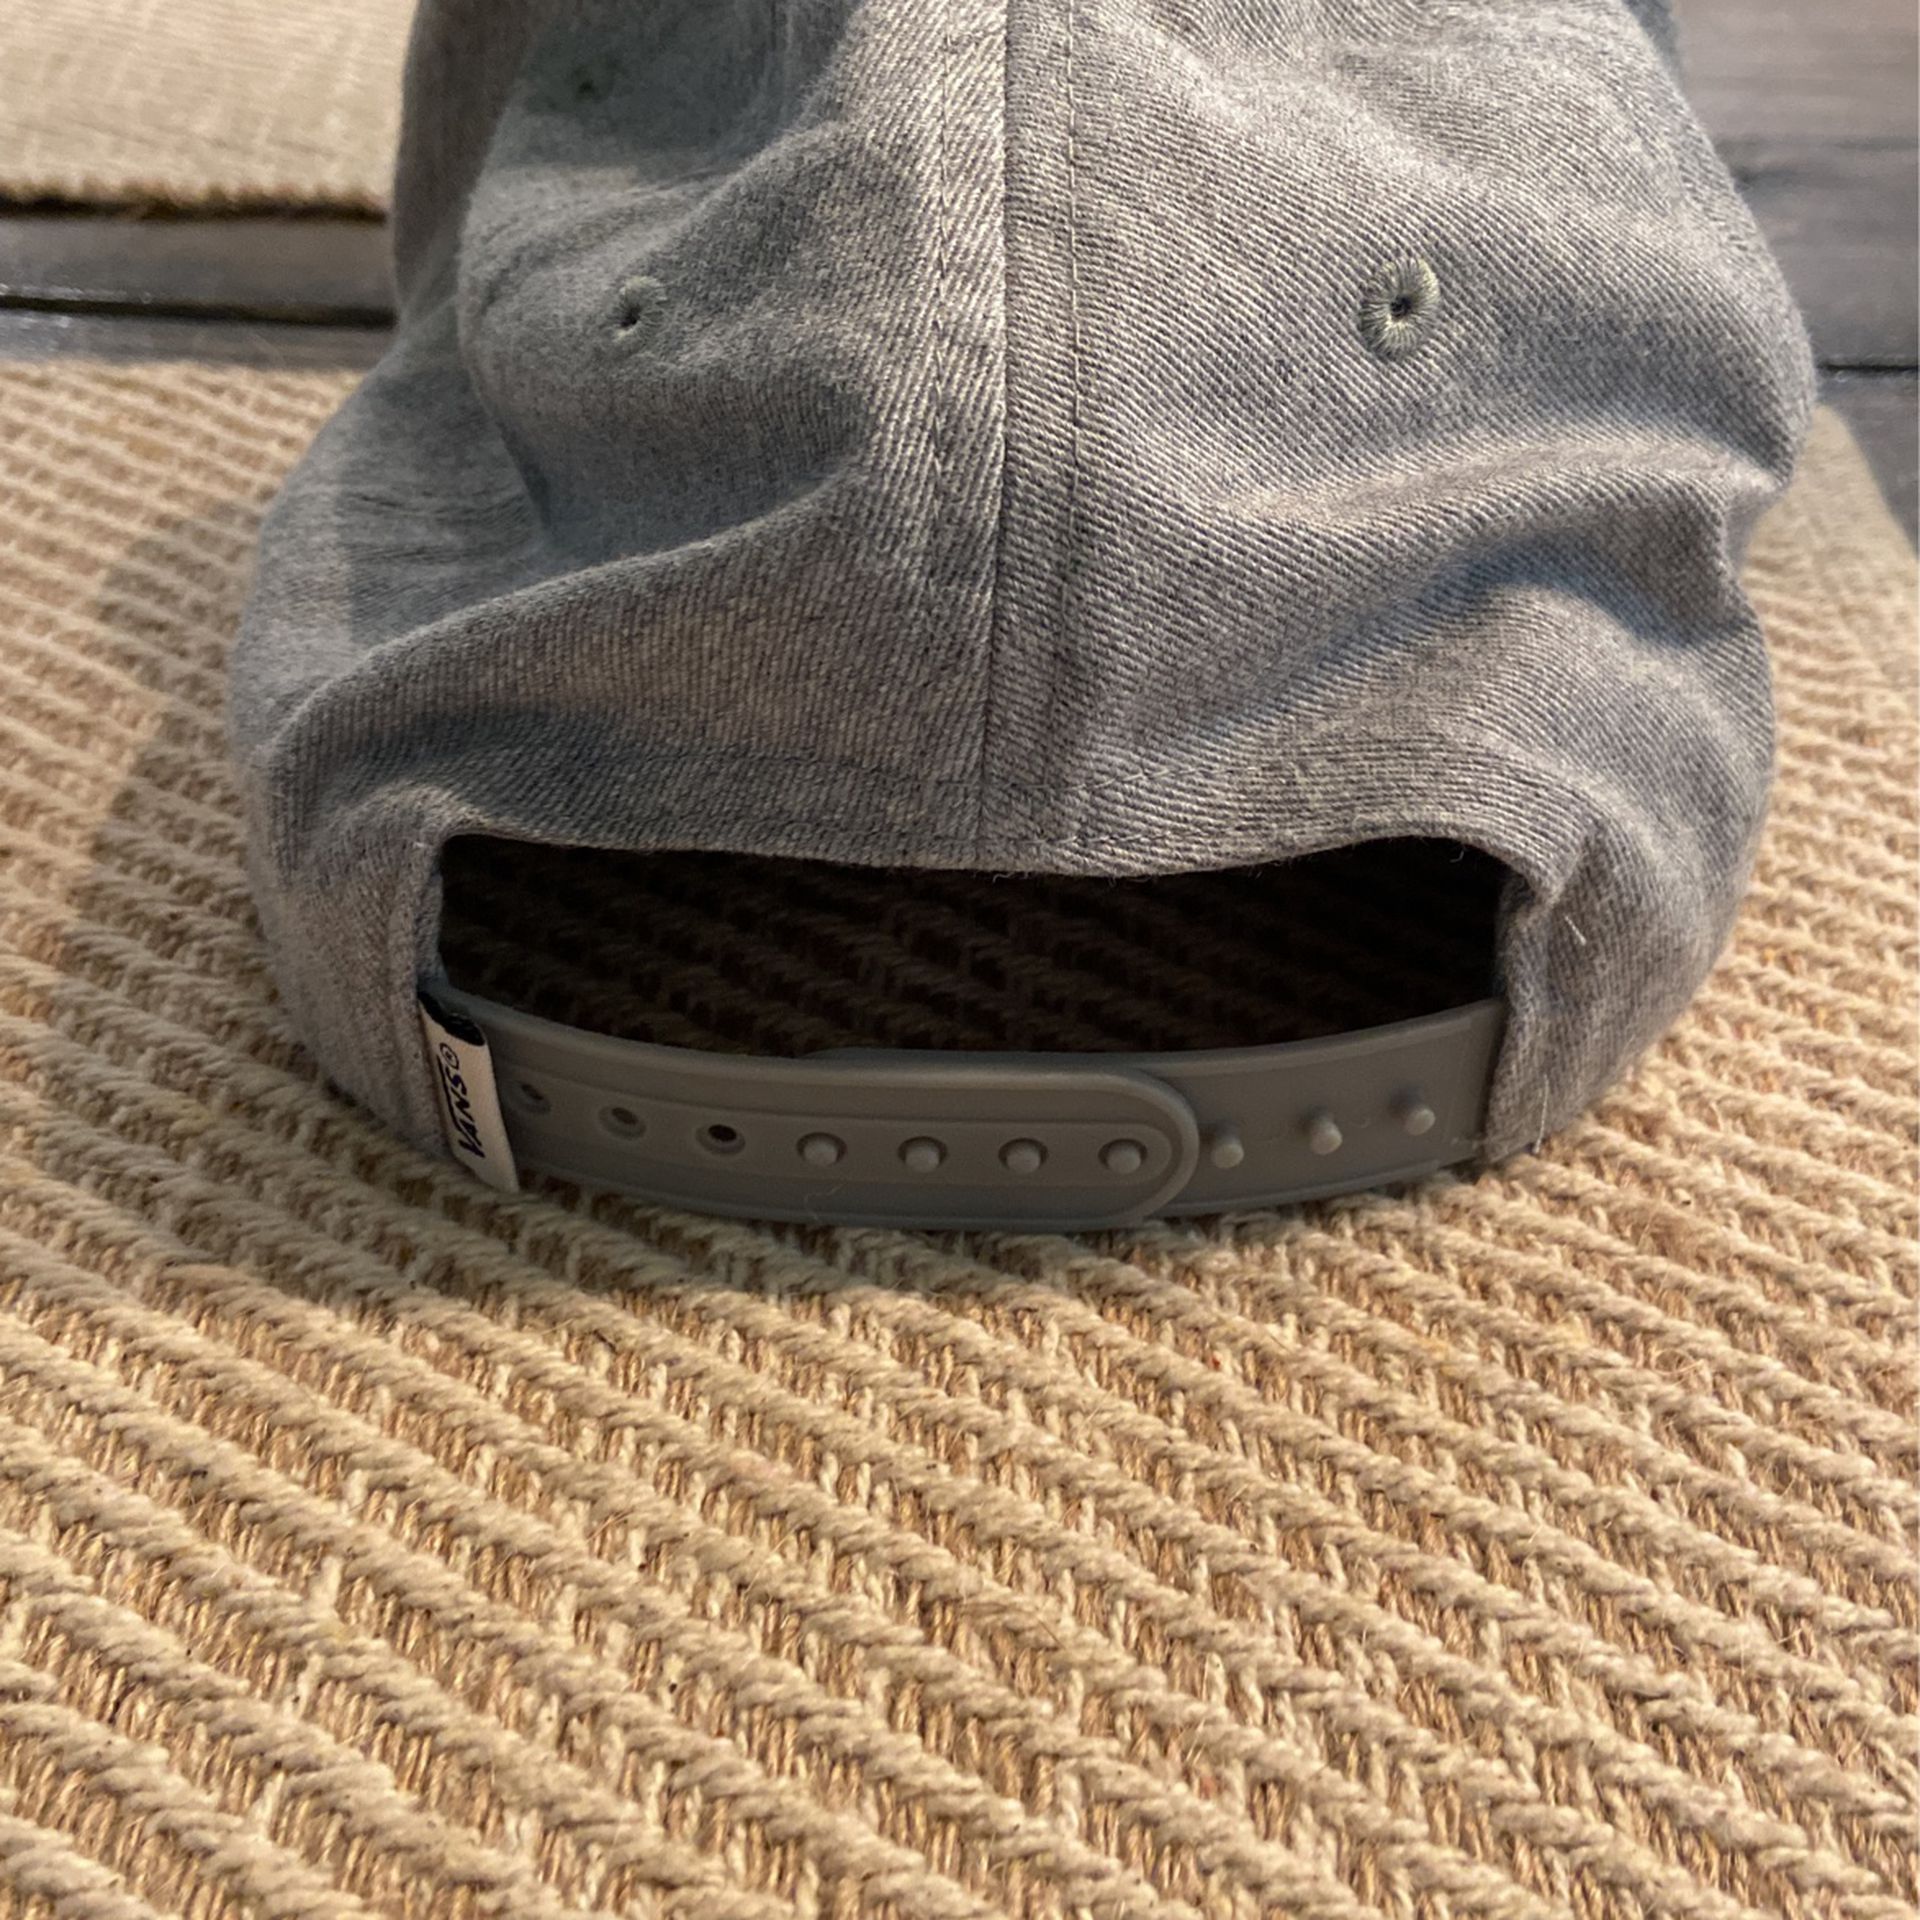 Vans SnapBack hat 